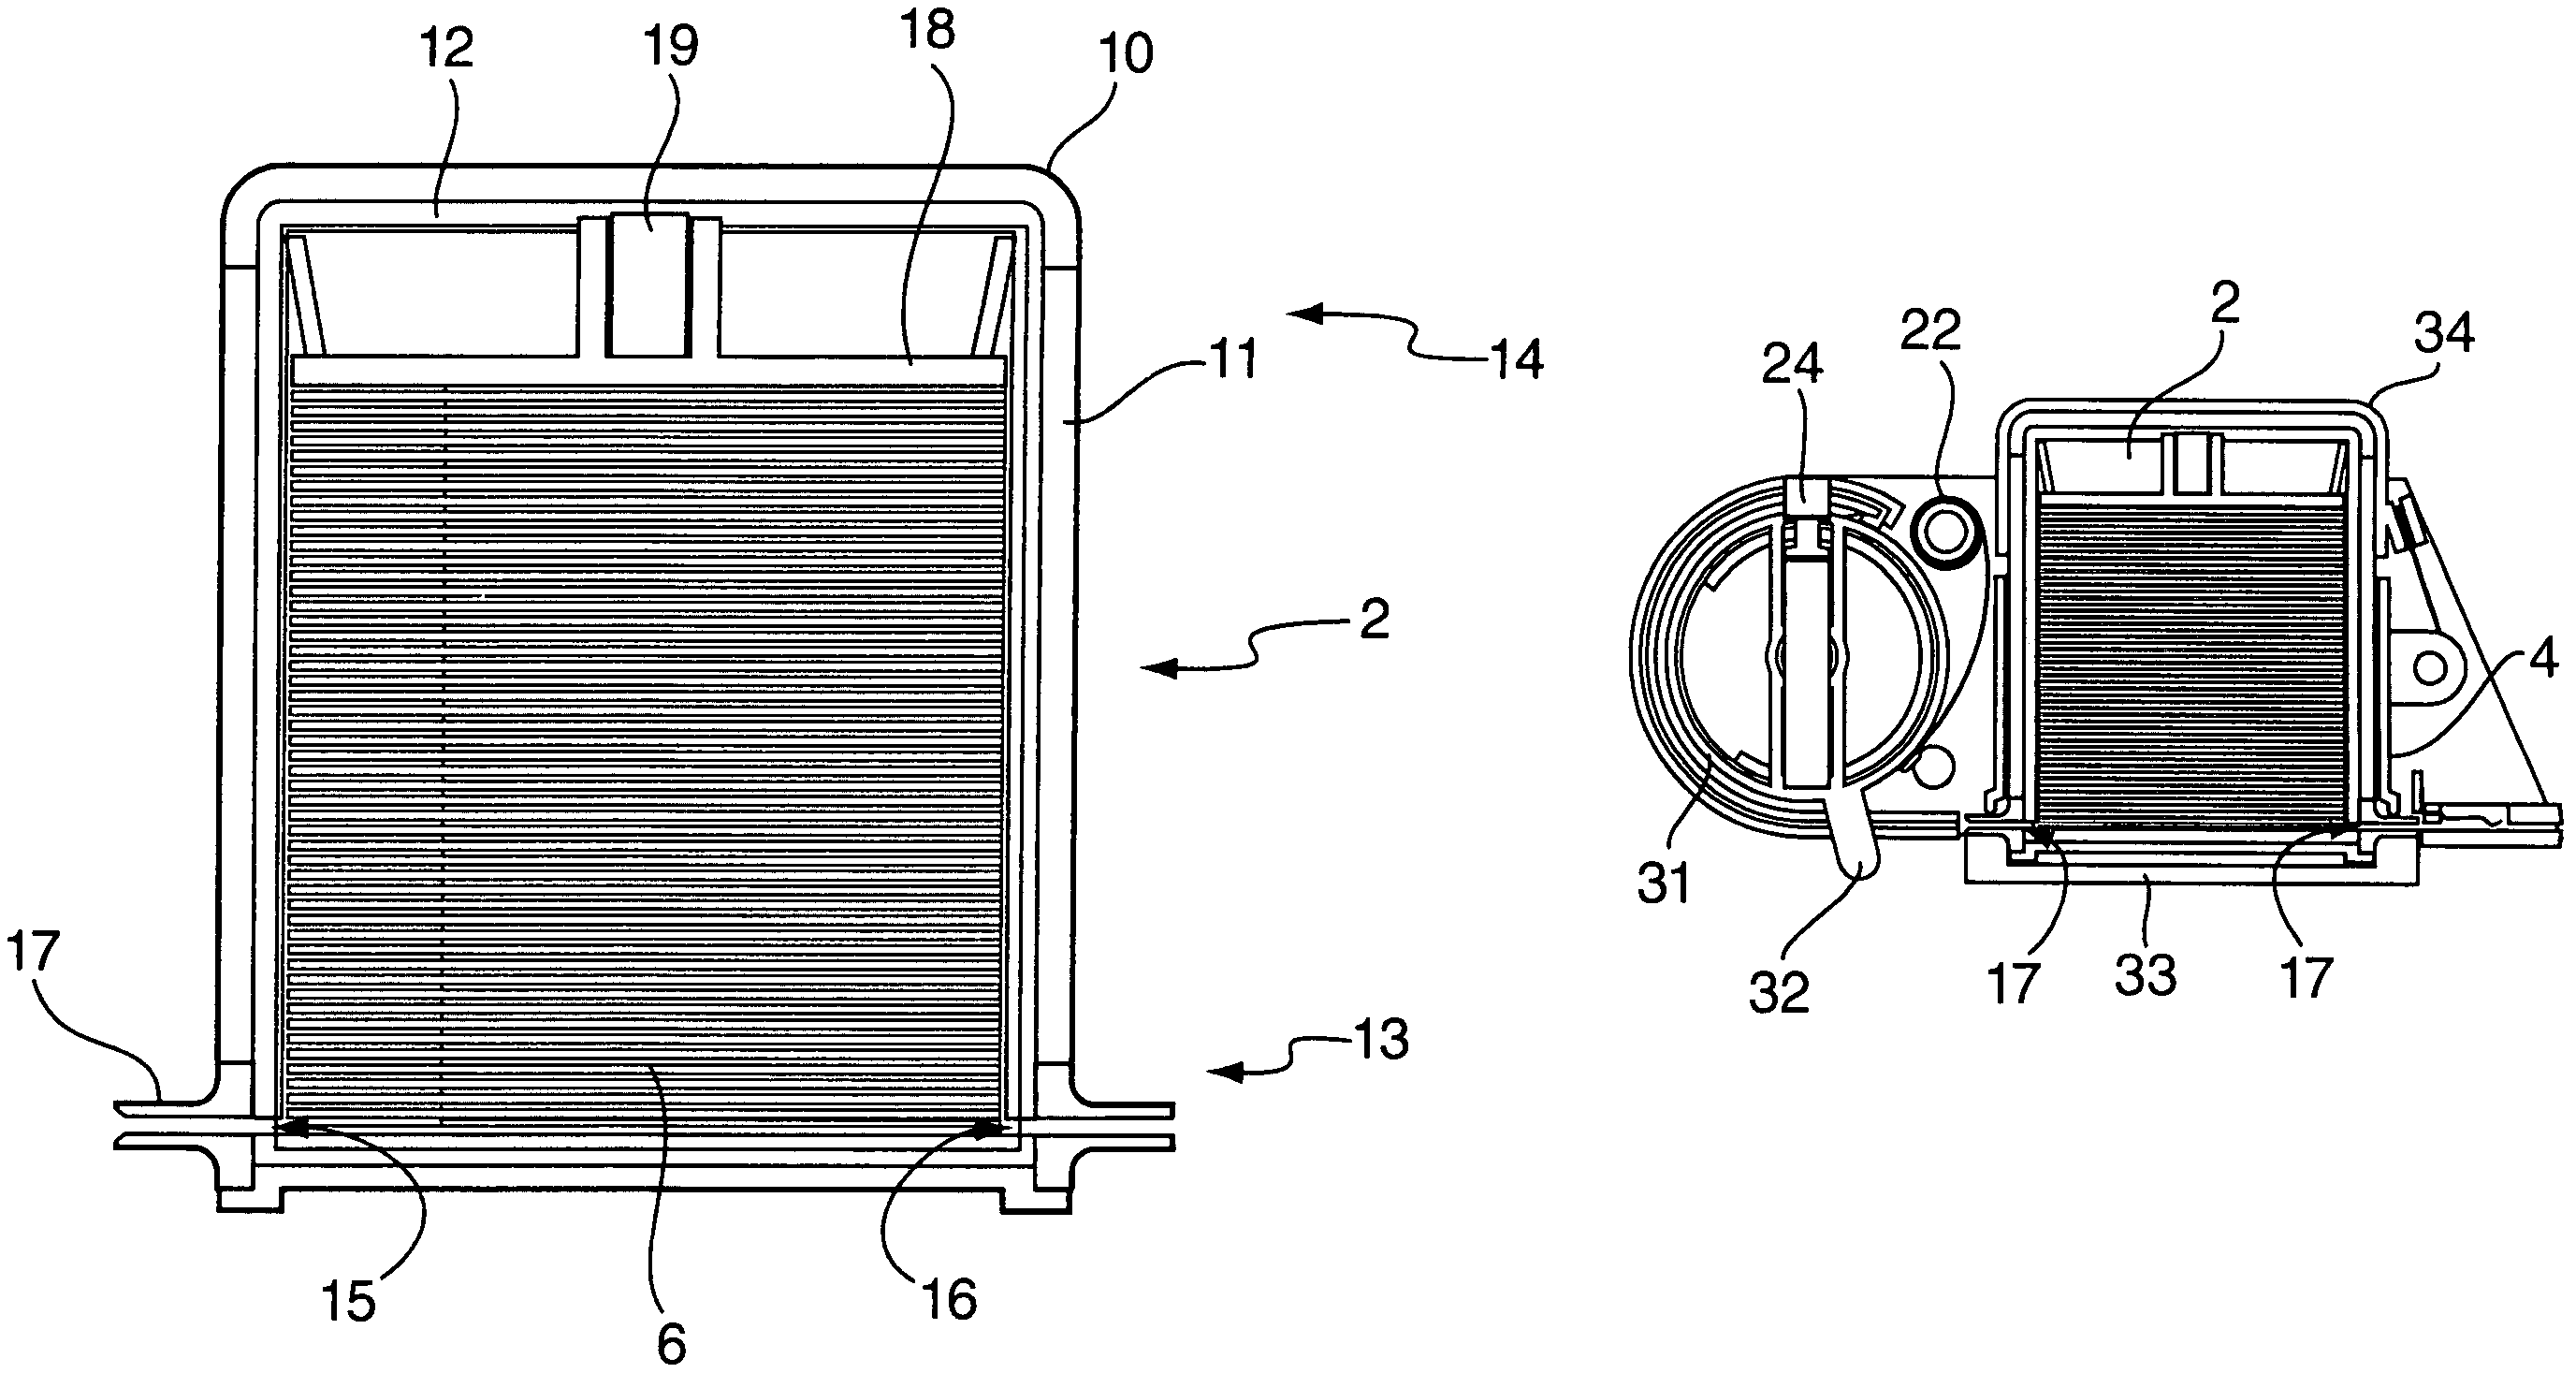 Sensor dispensing device